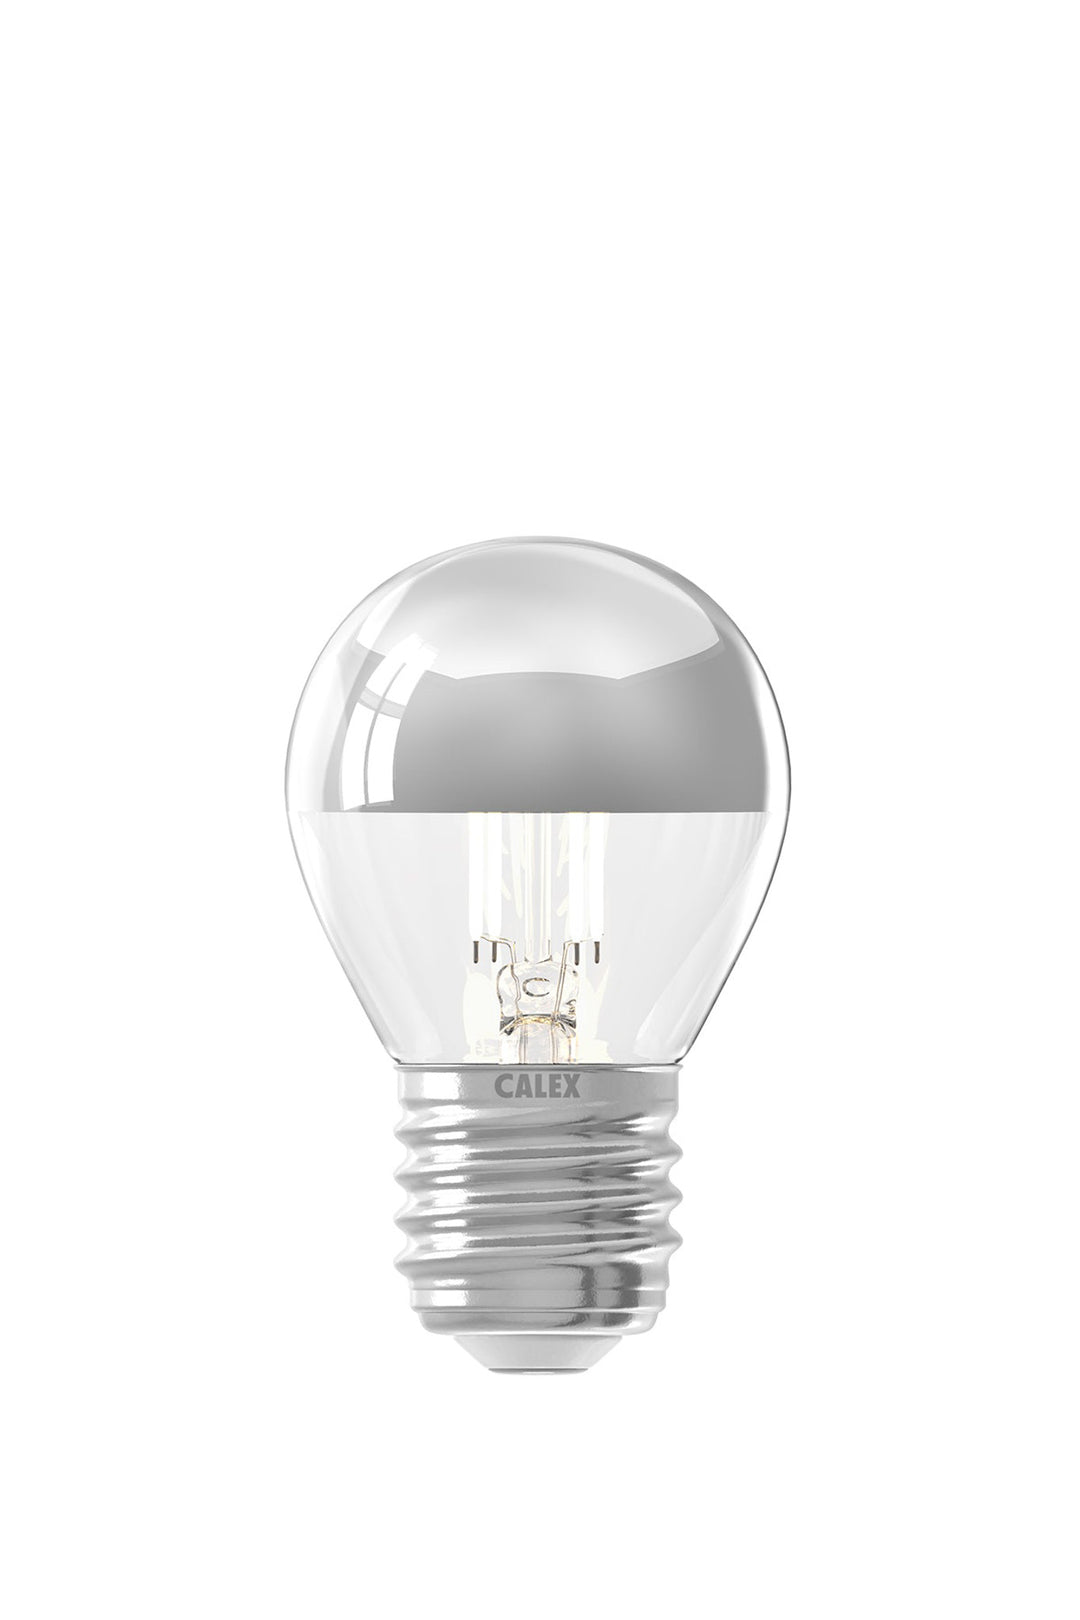 Calex LED Warm Filament Top-Mirror Ball Lamp P45, Chrome, E27, Dimmable 1101001100